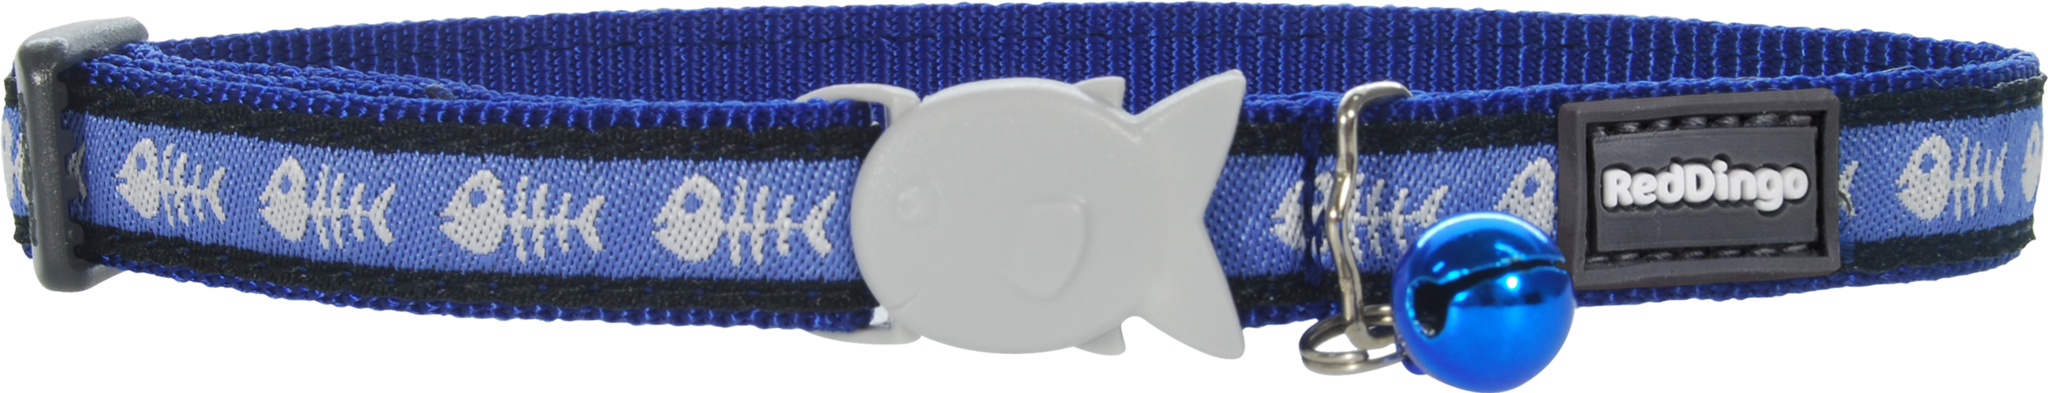 Red Dingo Designer Cat Safety Collar - Fish Bones (Dark Blue)